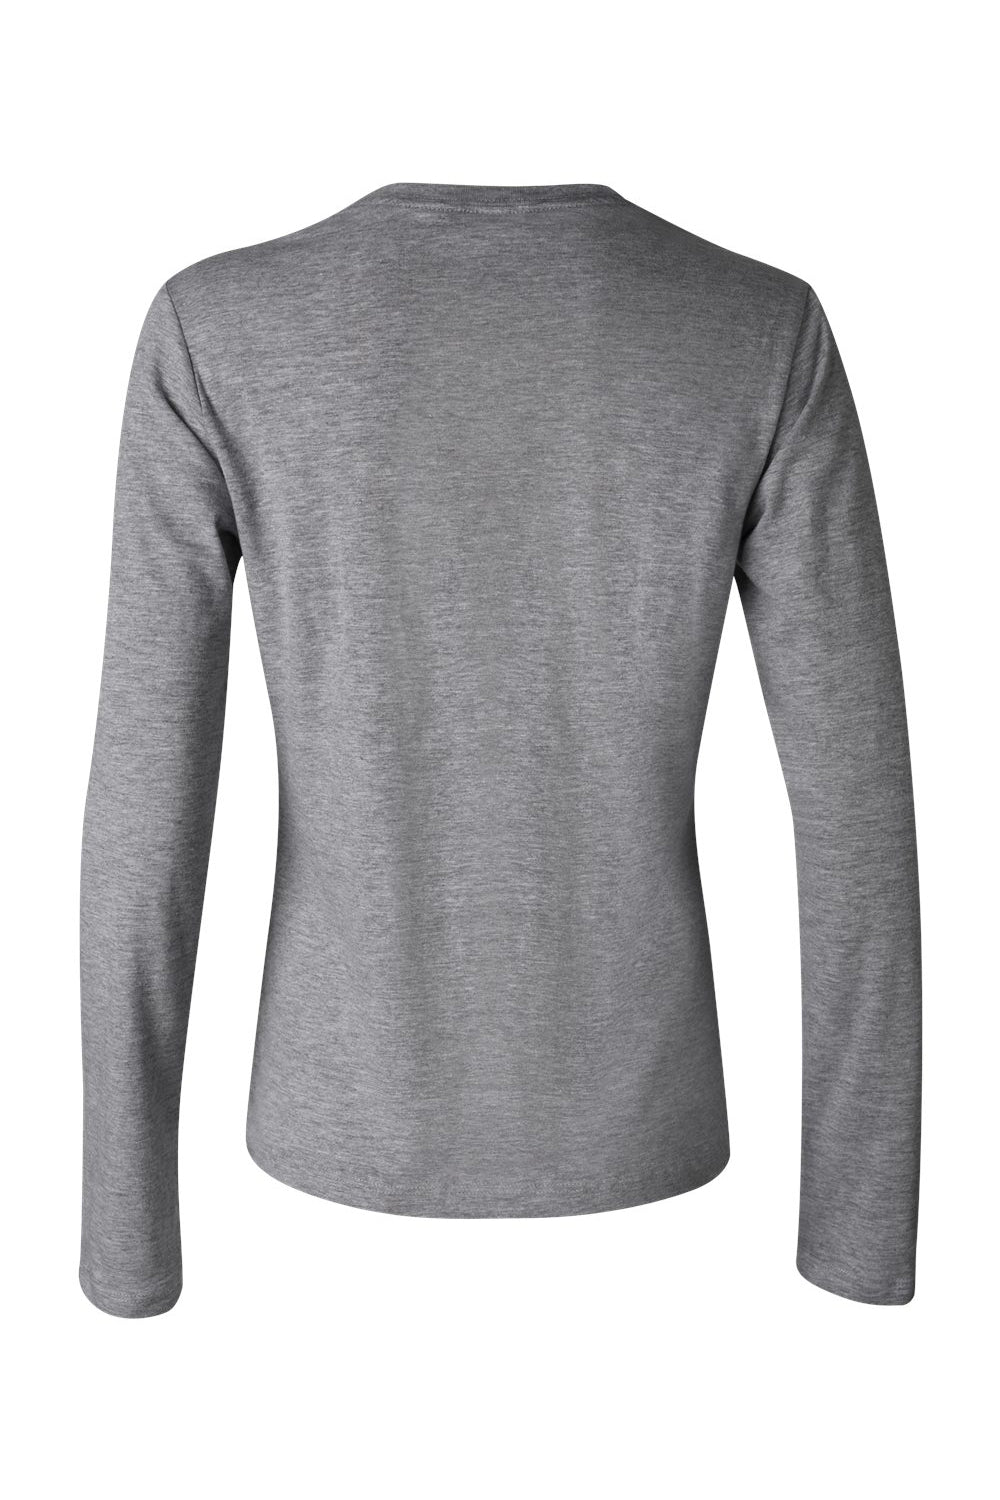 Bella + Canvas B6500/6500 Womens Jersey Long Sleeve Crewneck T-Shirt Heather Deep Grey Flat Back